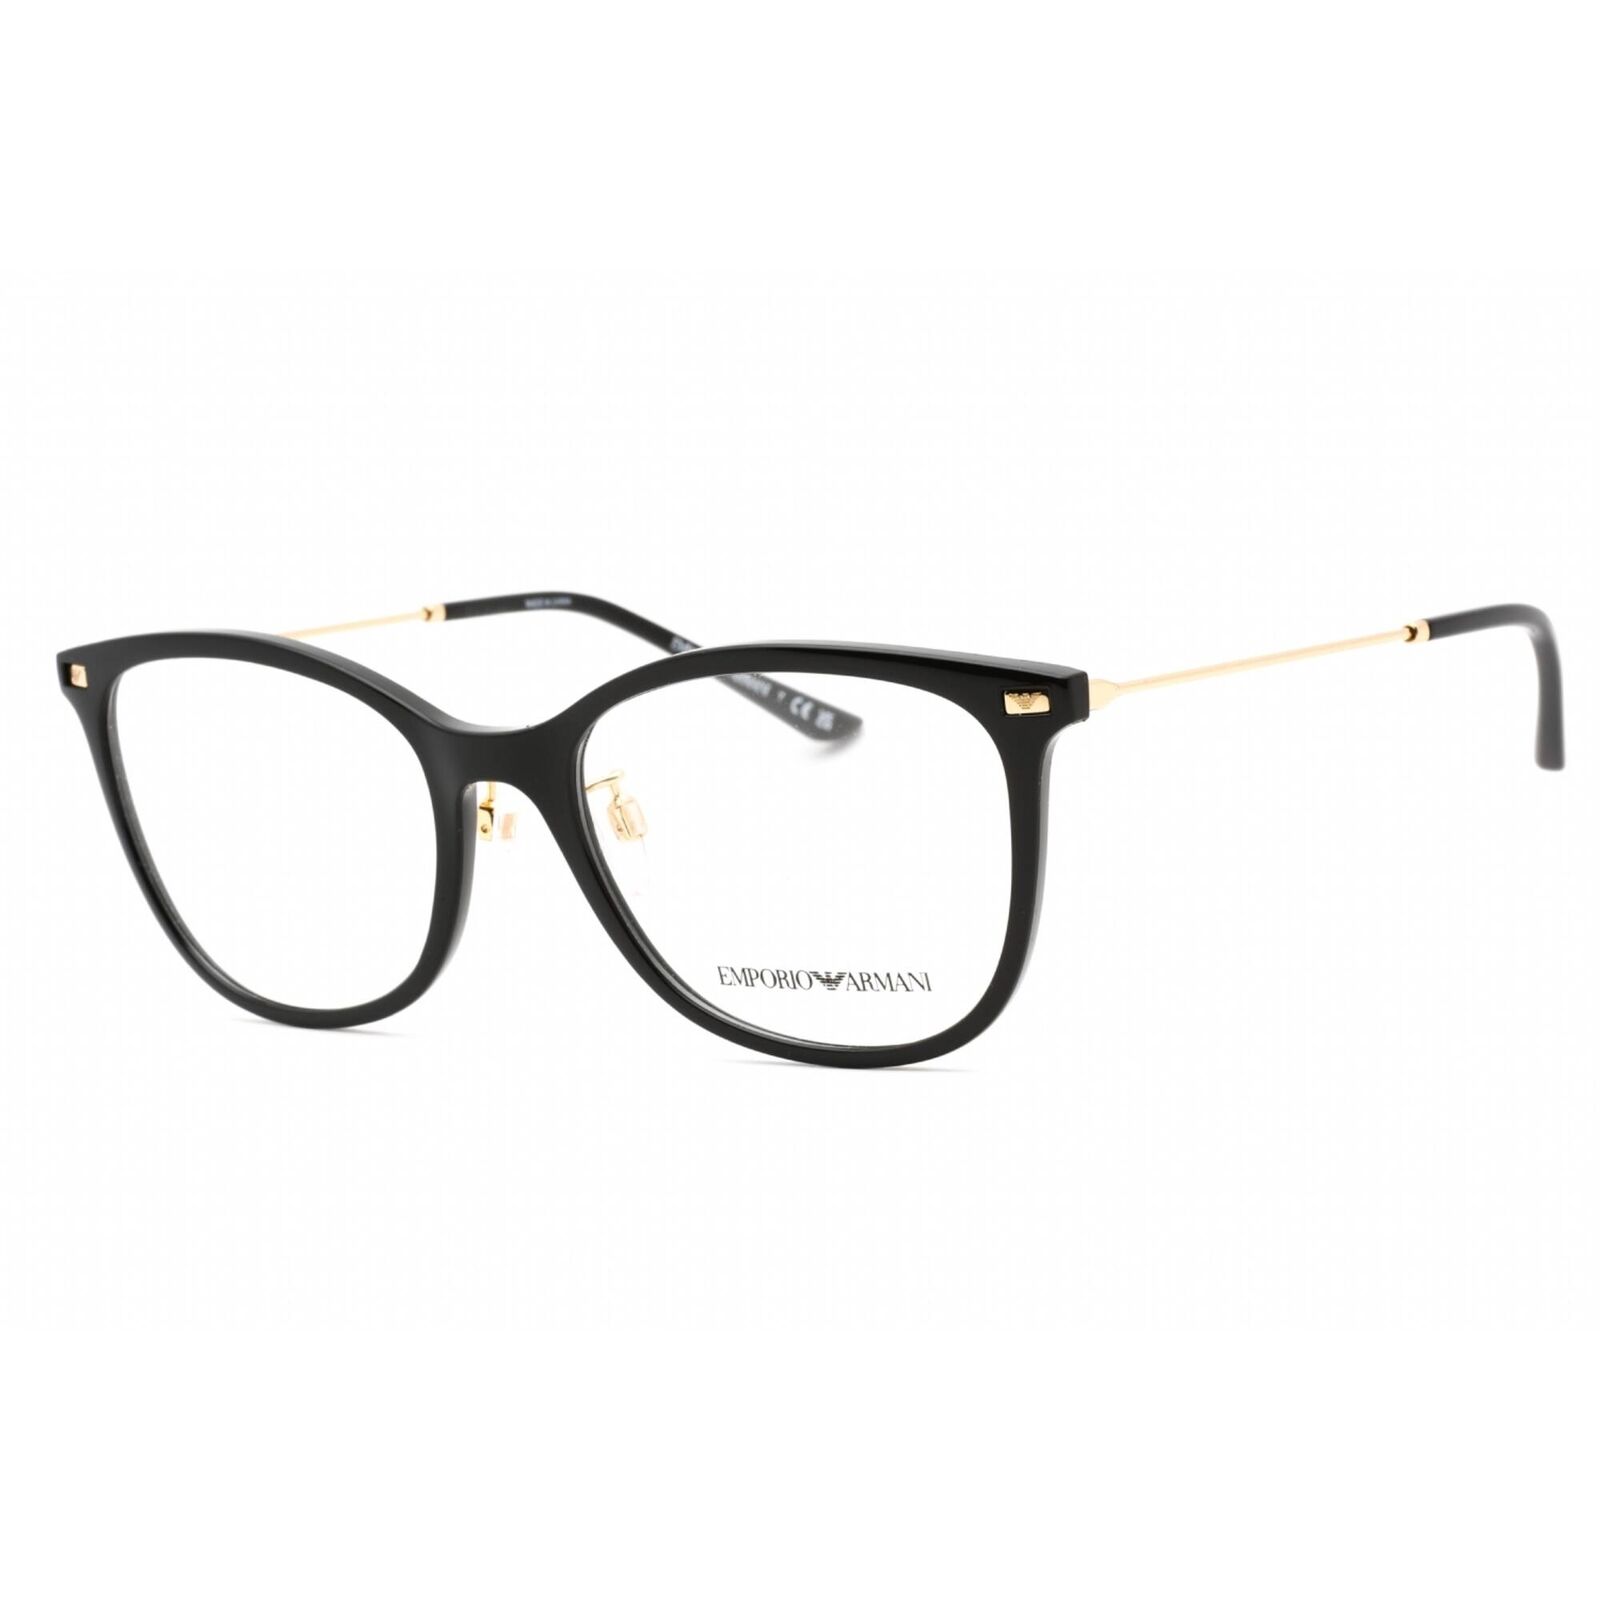 Emporio Armani Women's Eyeglasses Black Full Rim Rectangular Frame 0EA3199 5001 Emporio Armani 0EA3199 5001